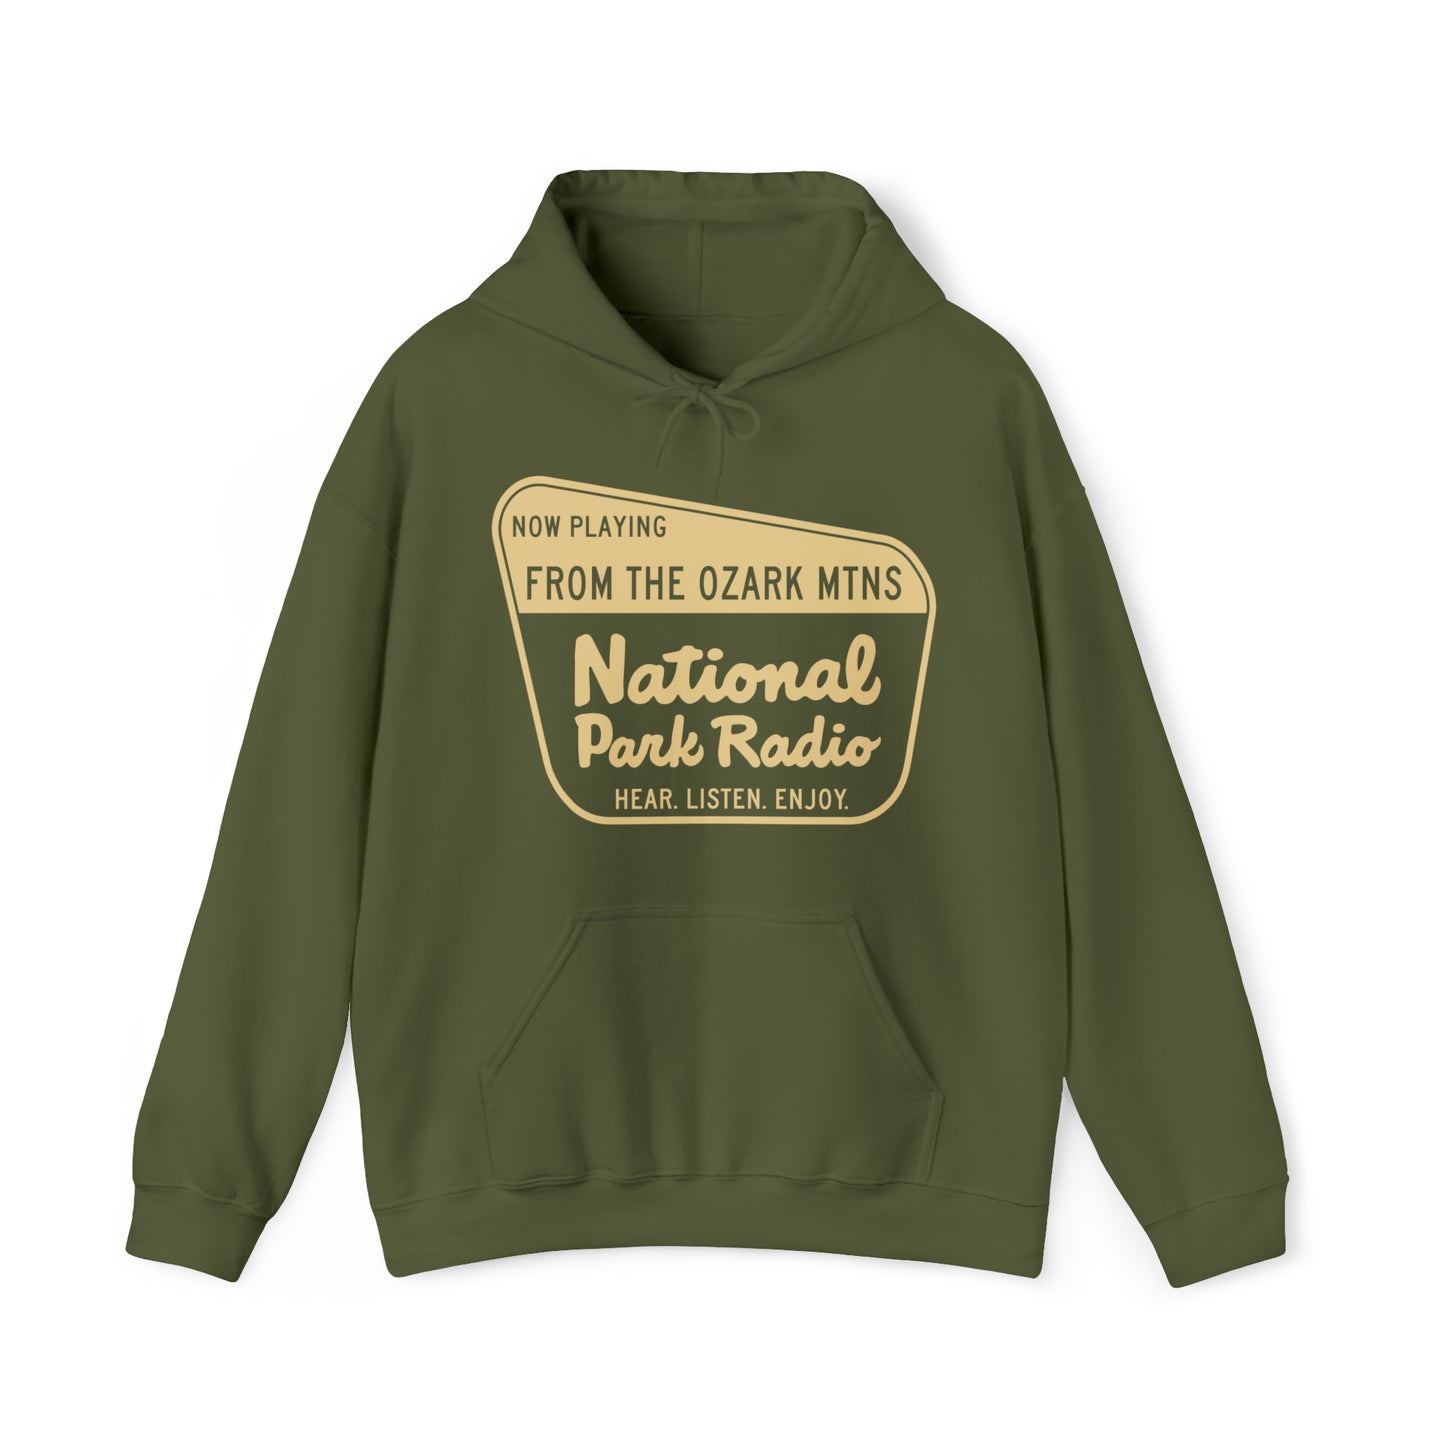 NPR "National Forest Sign" Hooded Sweatshirt